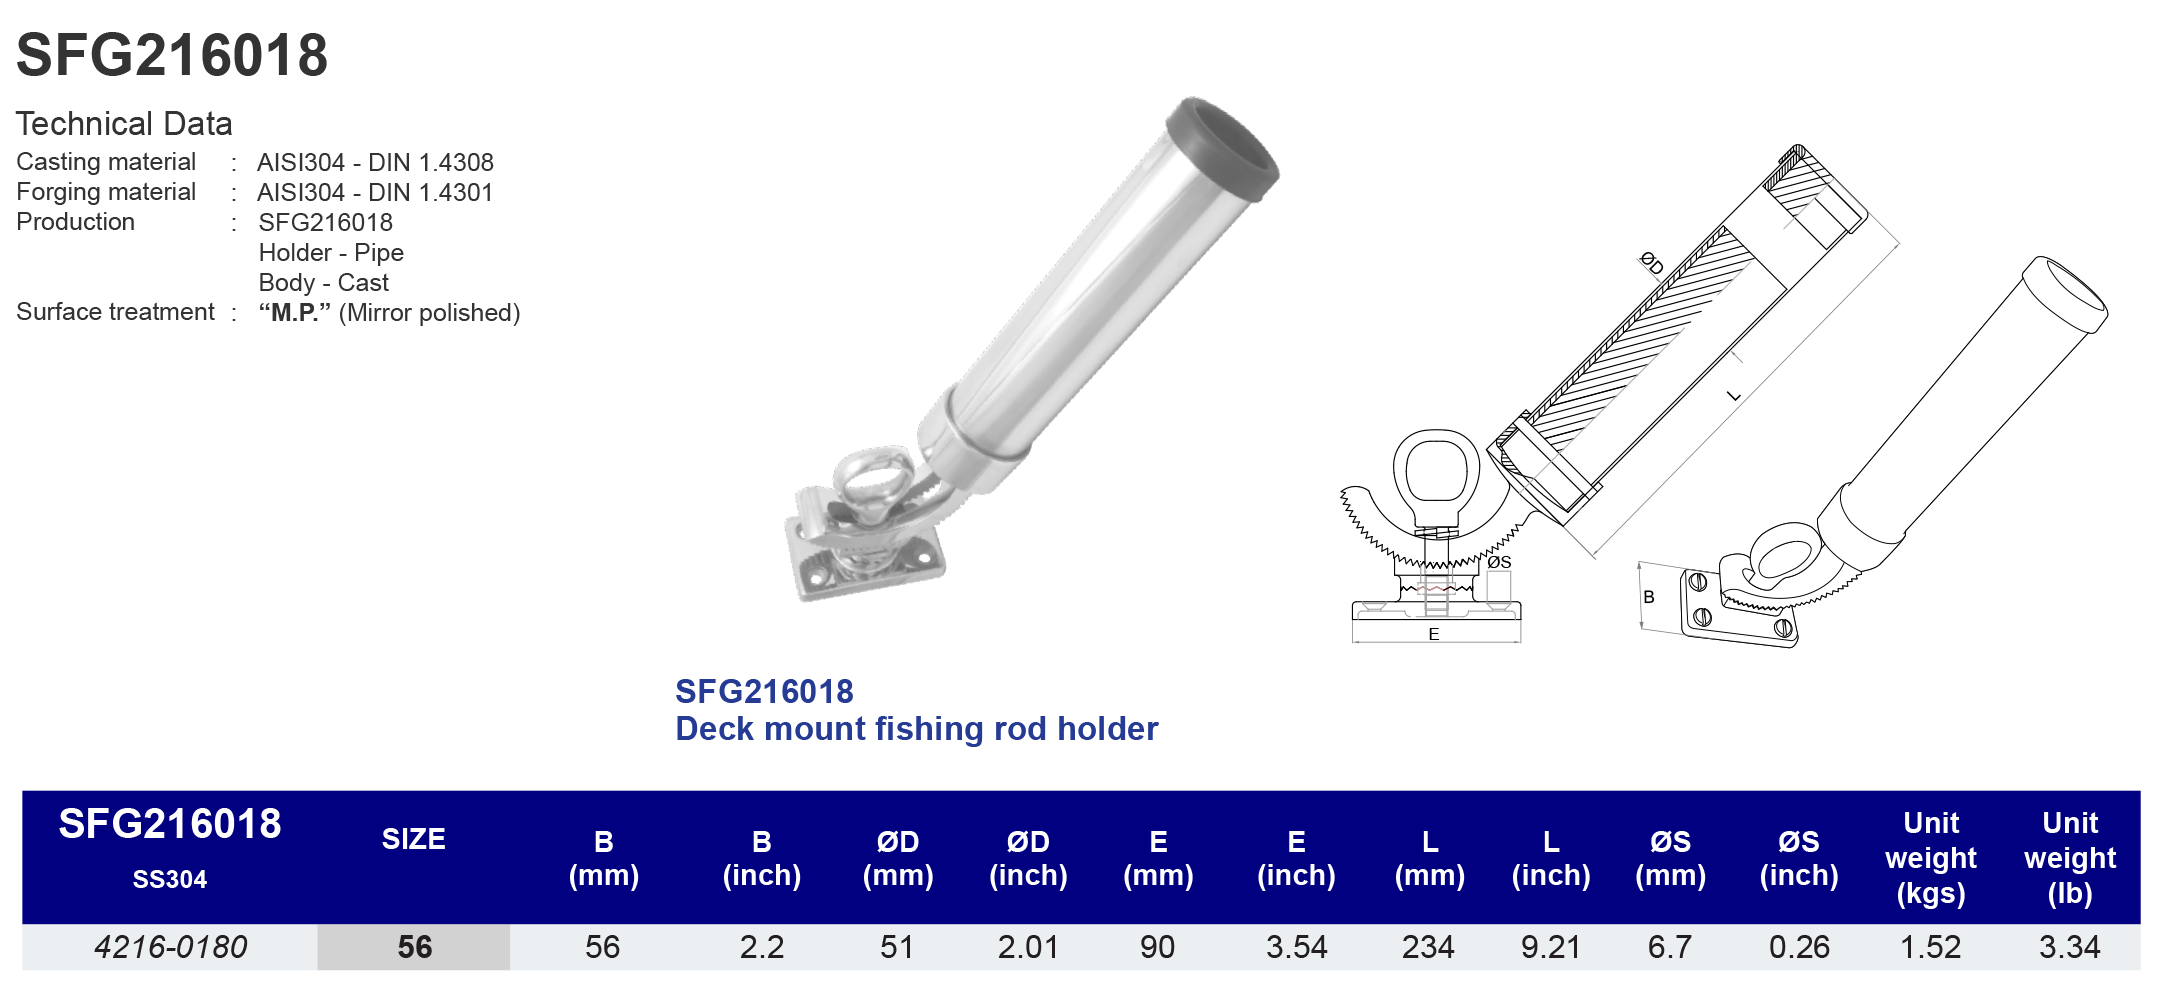 SFG216018 Deck mount fishing rod holder - 304